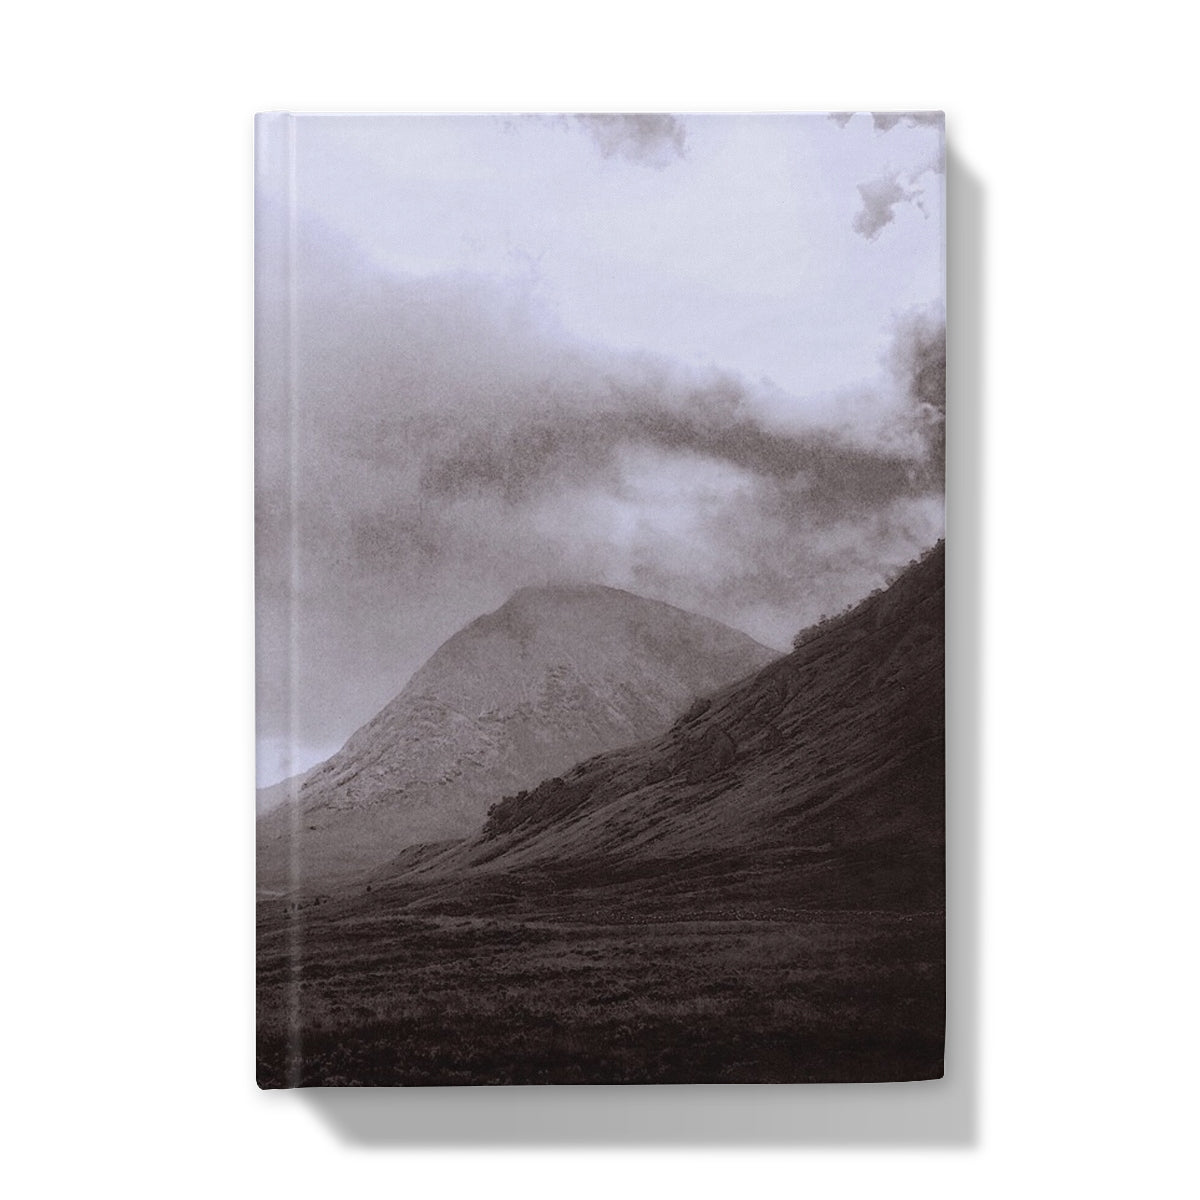 Glencoe Mist Art Gifts Hardback Journal-Journals & Notebooks-Glencoe Art Gallery-A5-Lined-Paintings, Prints, Homeware, Art Gifts From Scotland By Scottish Artist Kevin Hunter